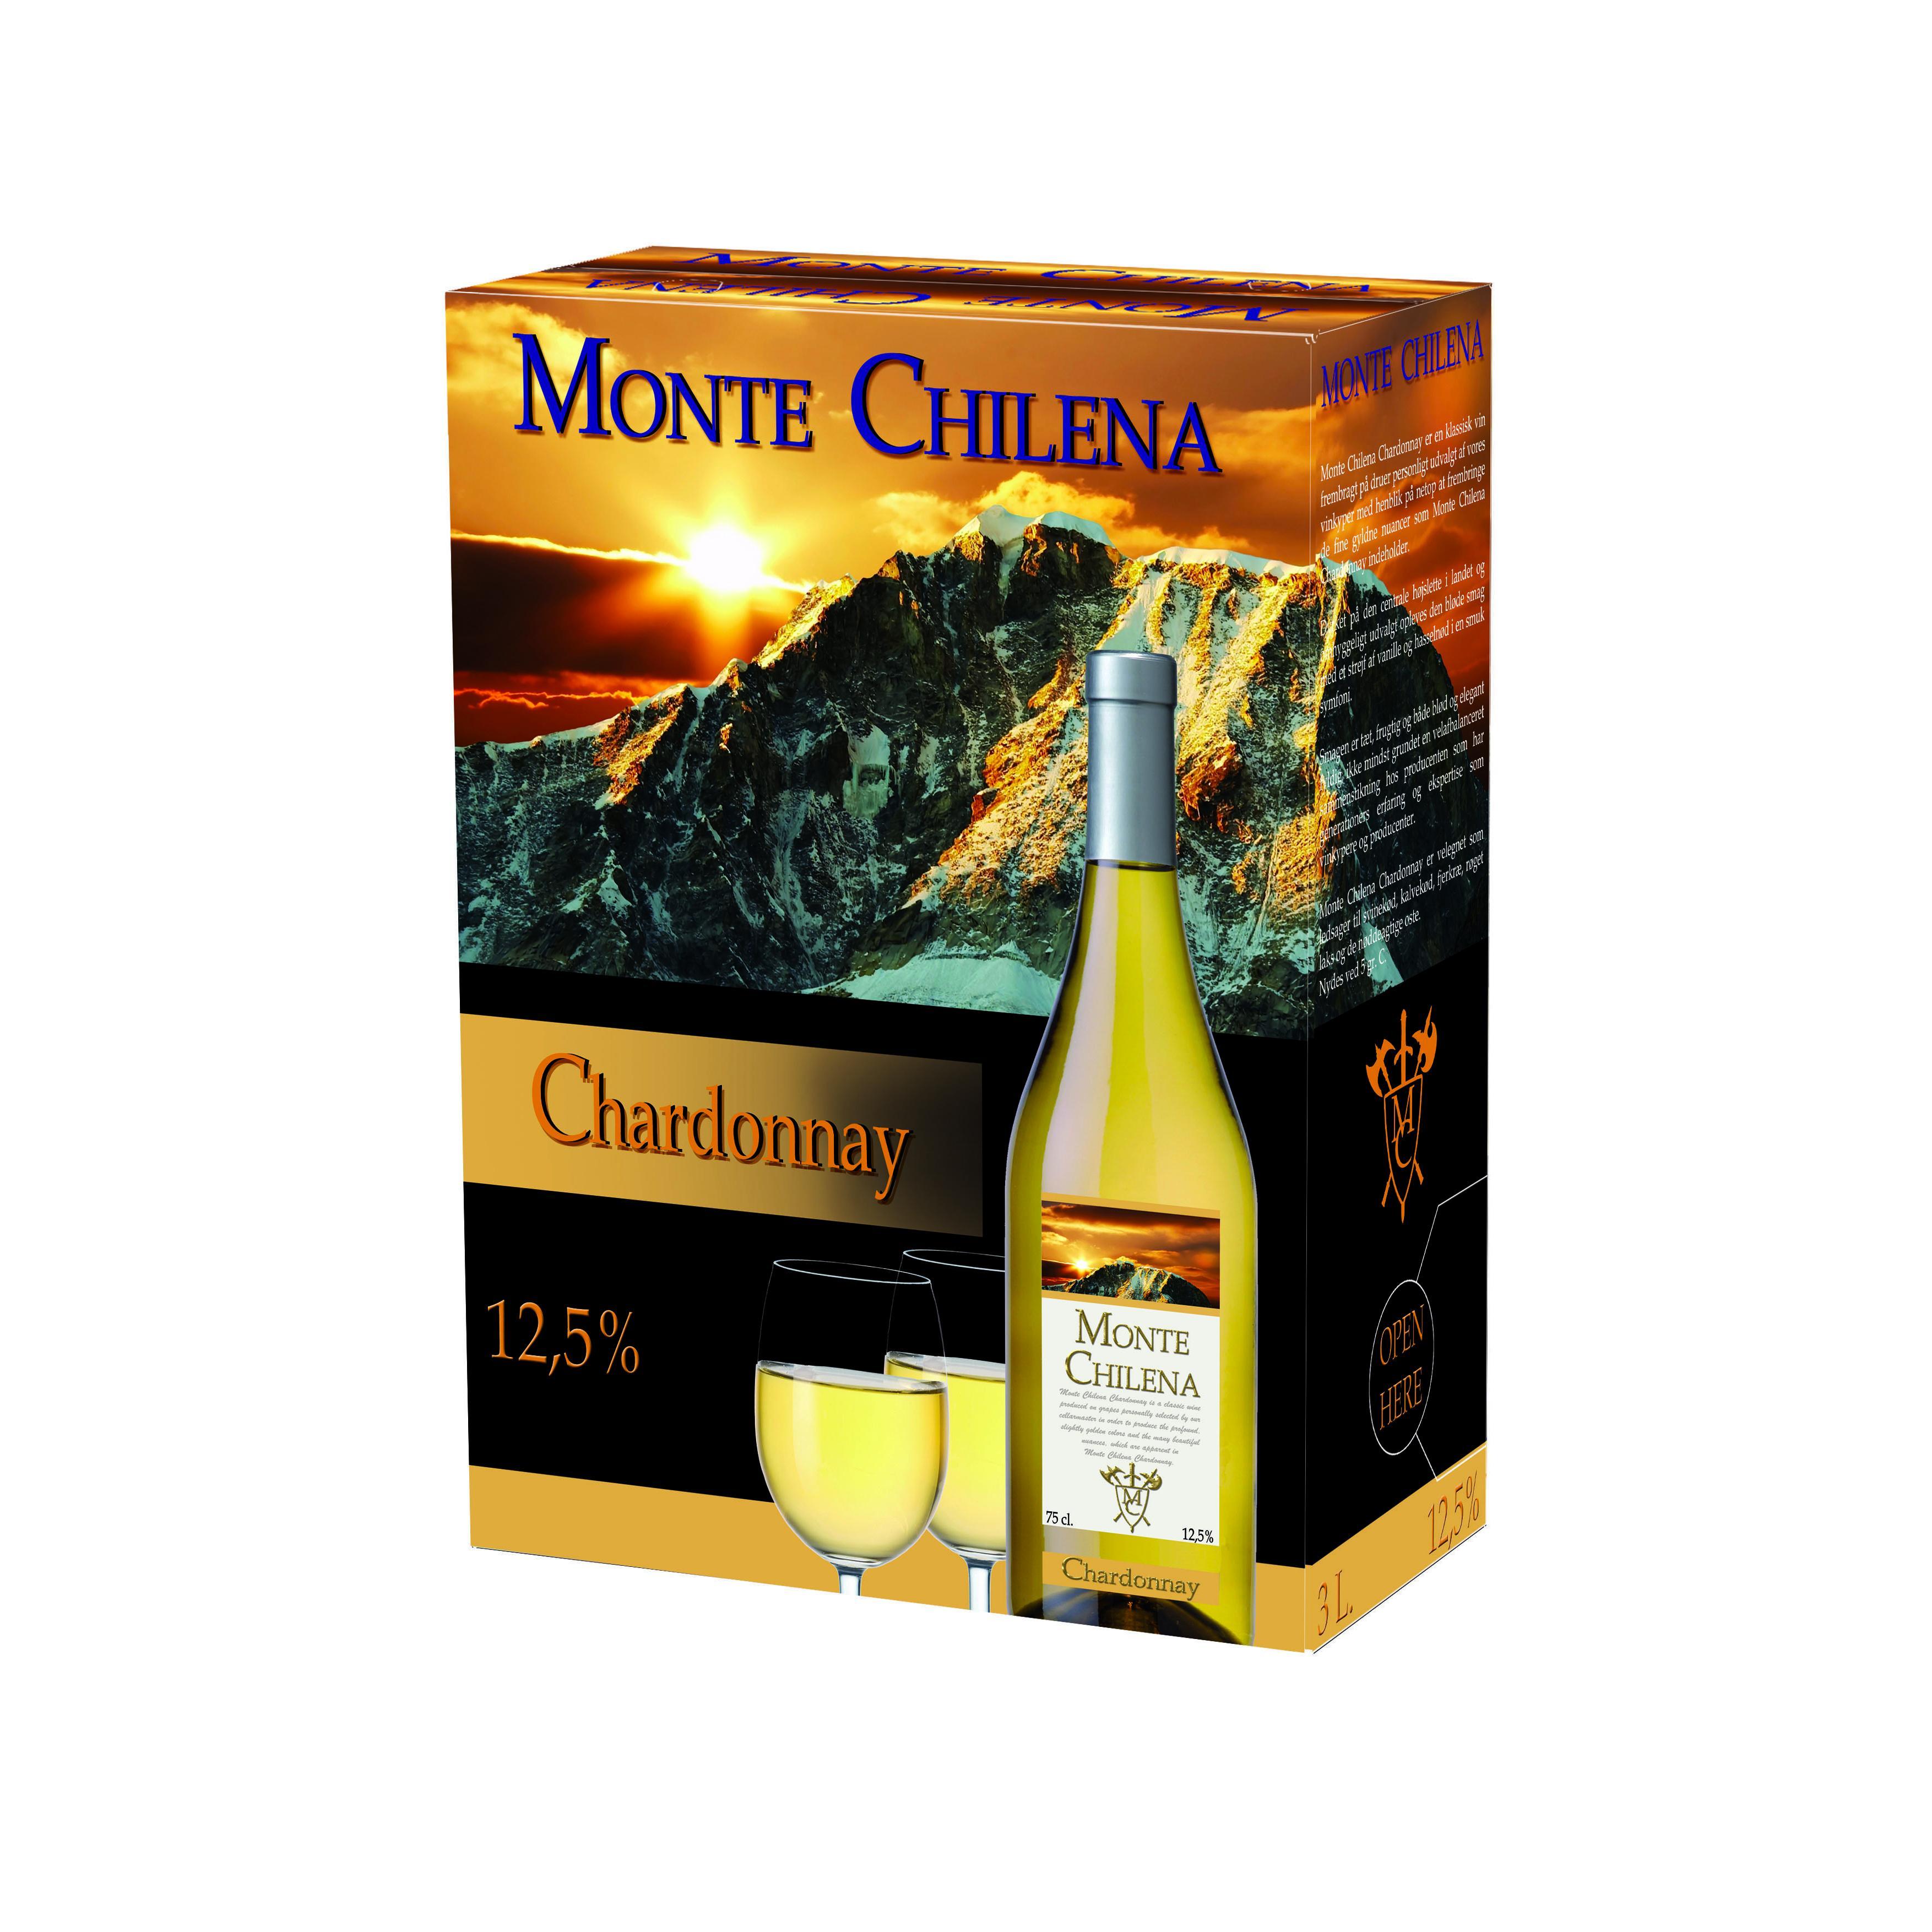 Monte Chilena Chardonnay 3l